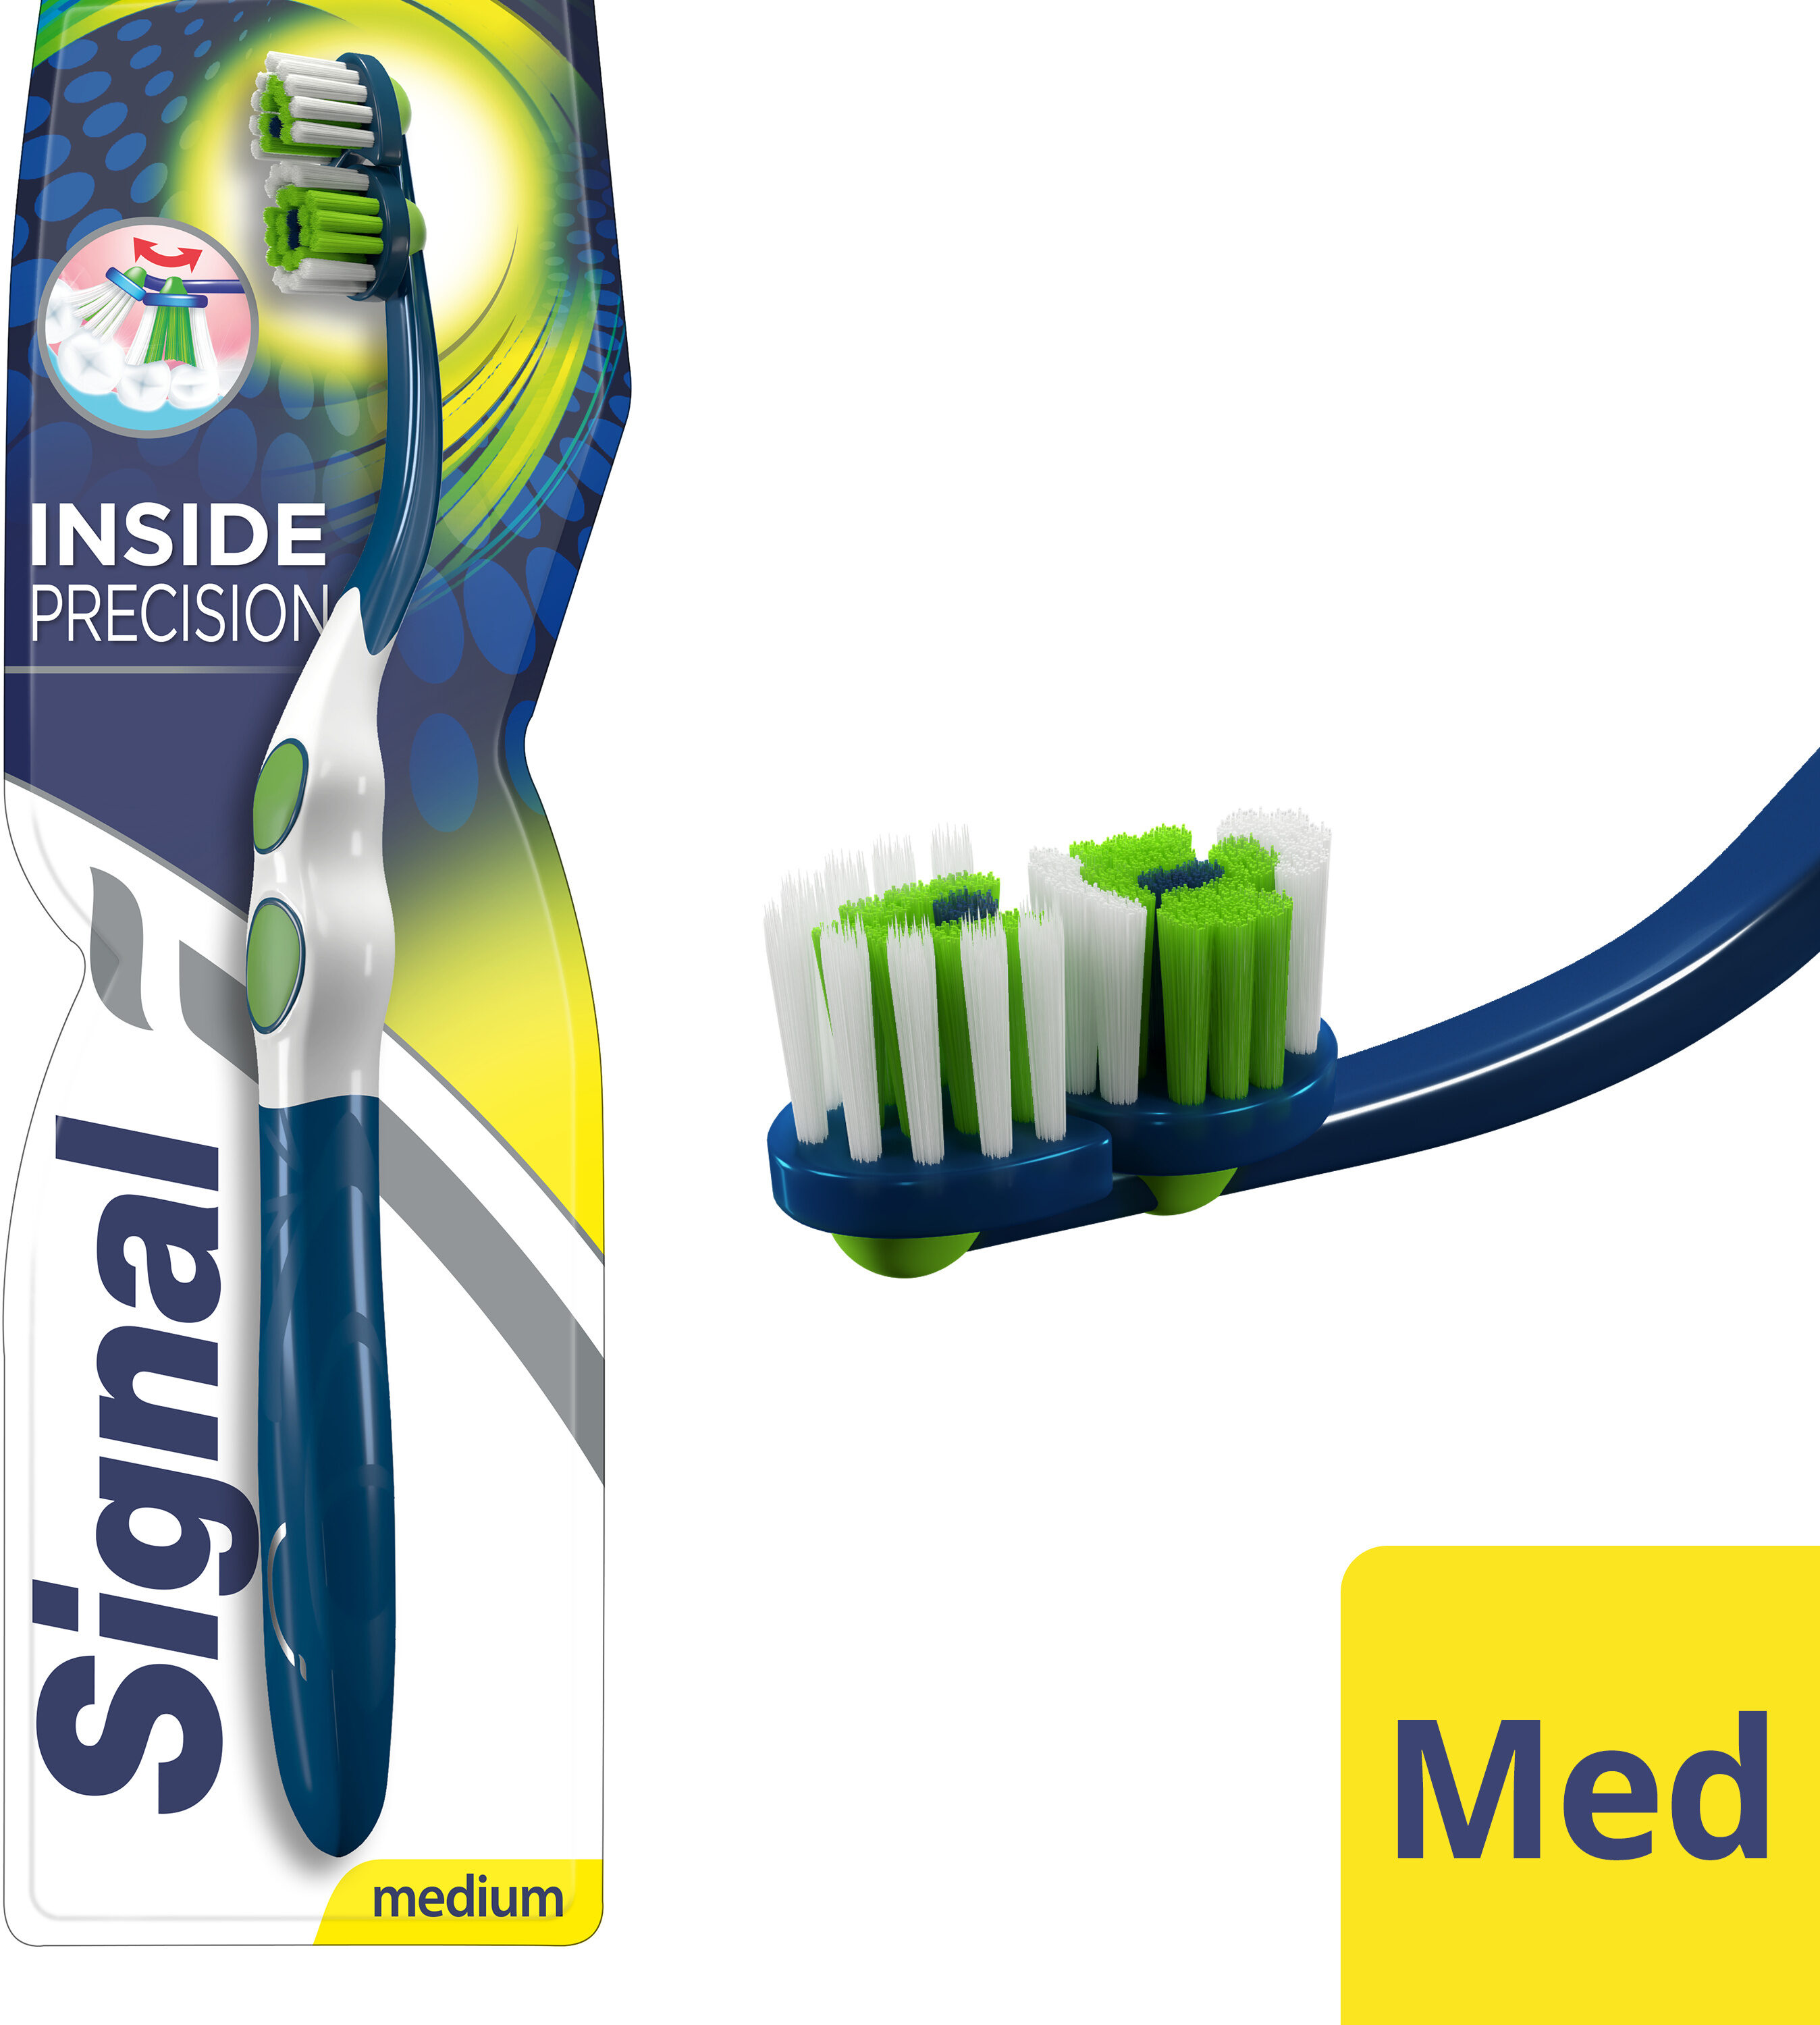 Signal Brosse à Dents Inside Précision Medium x1 - 製品 - fr